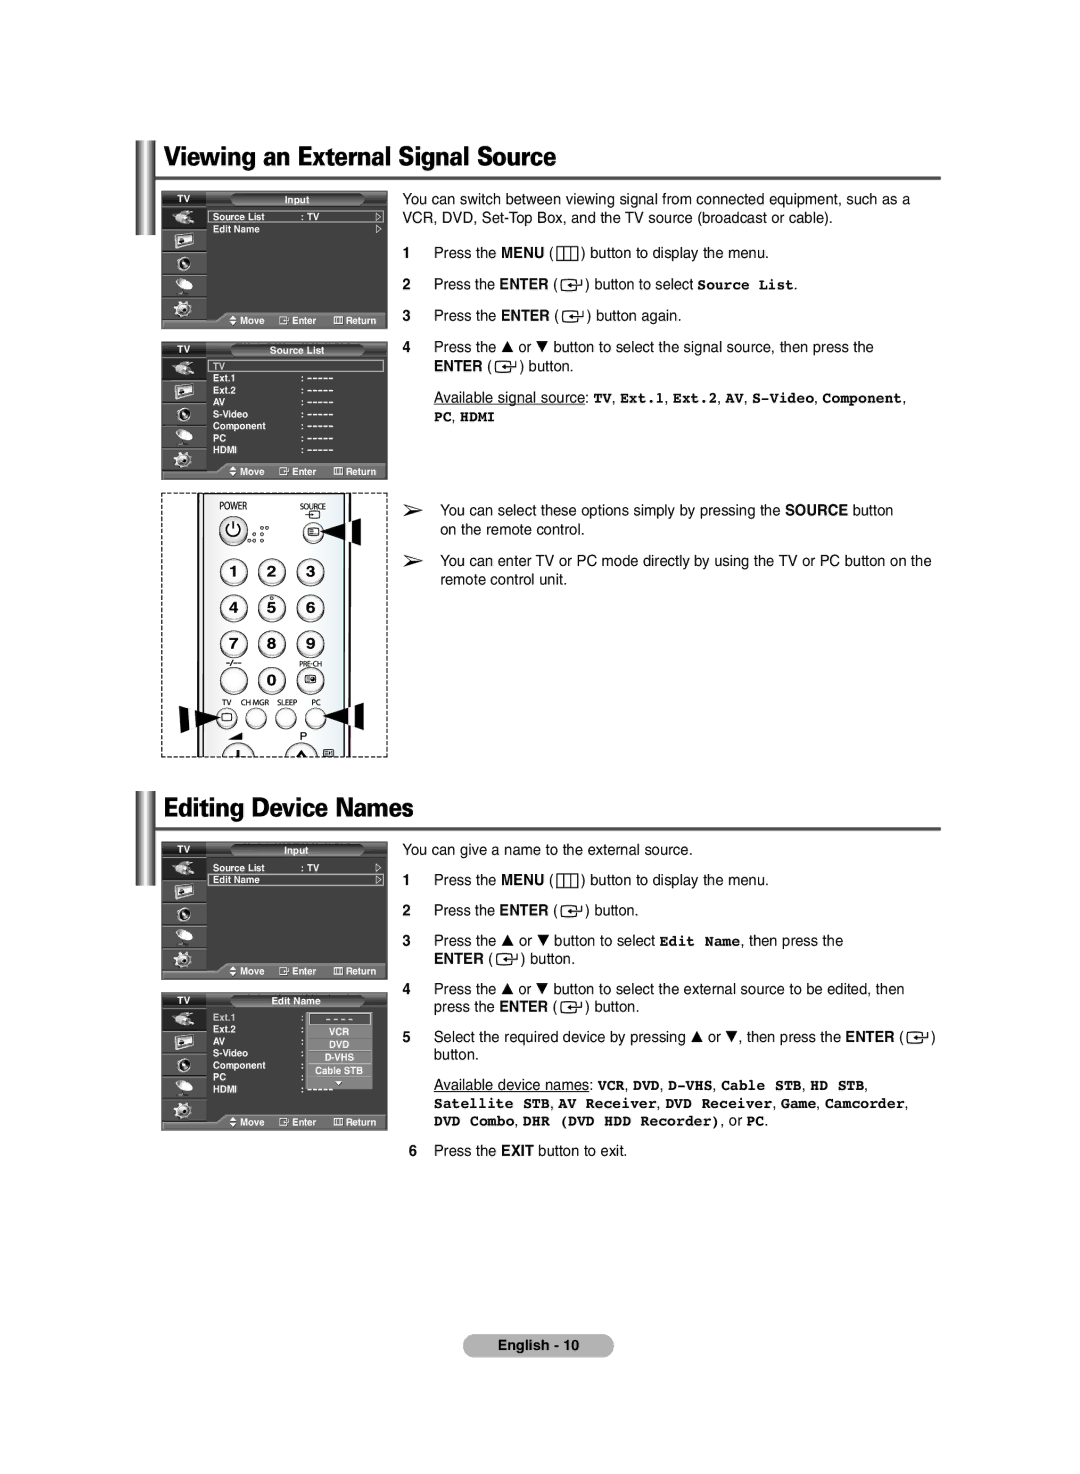 Samsung PS-42E7S, PS-42E7H manual Viewing an External Signal Source, Editing Device Names 